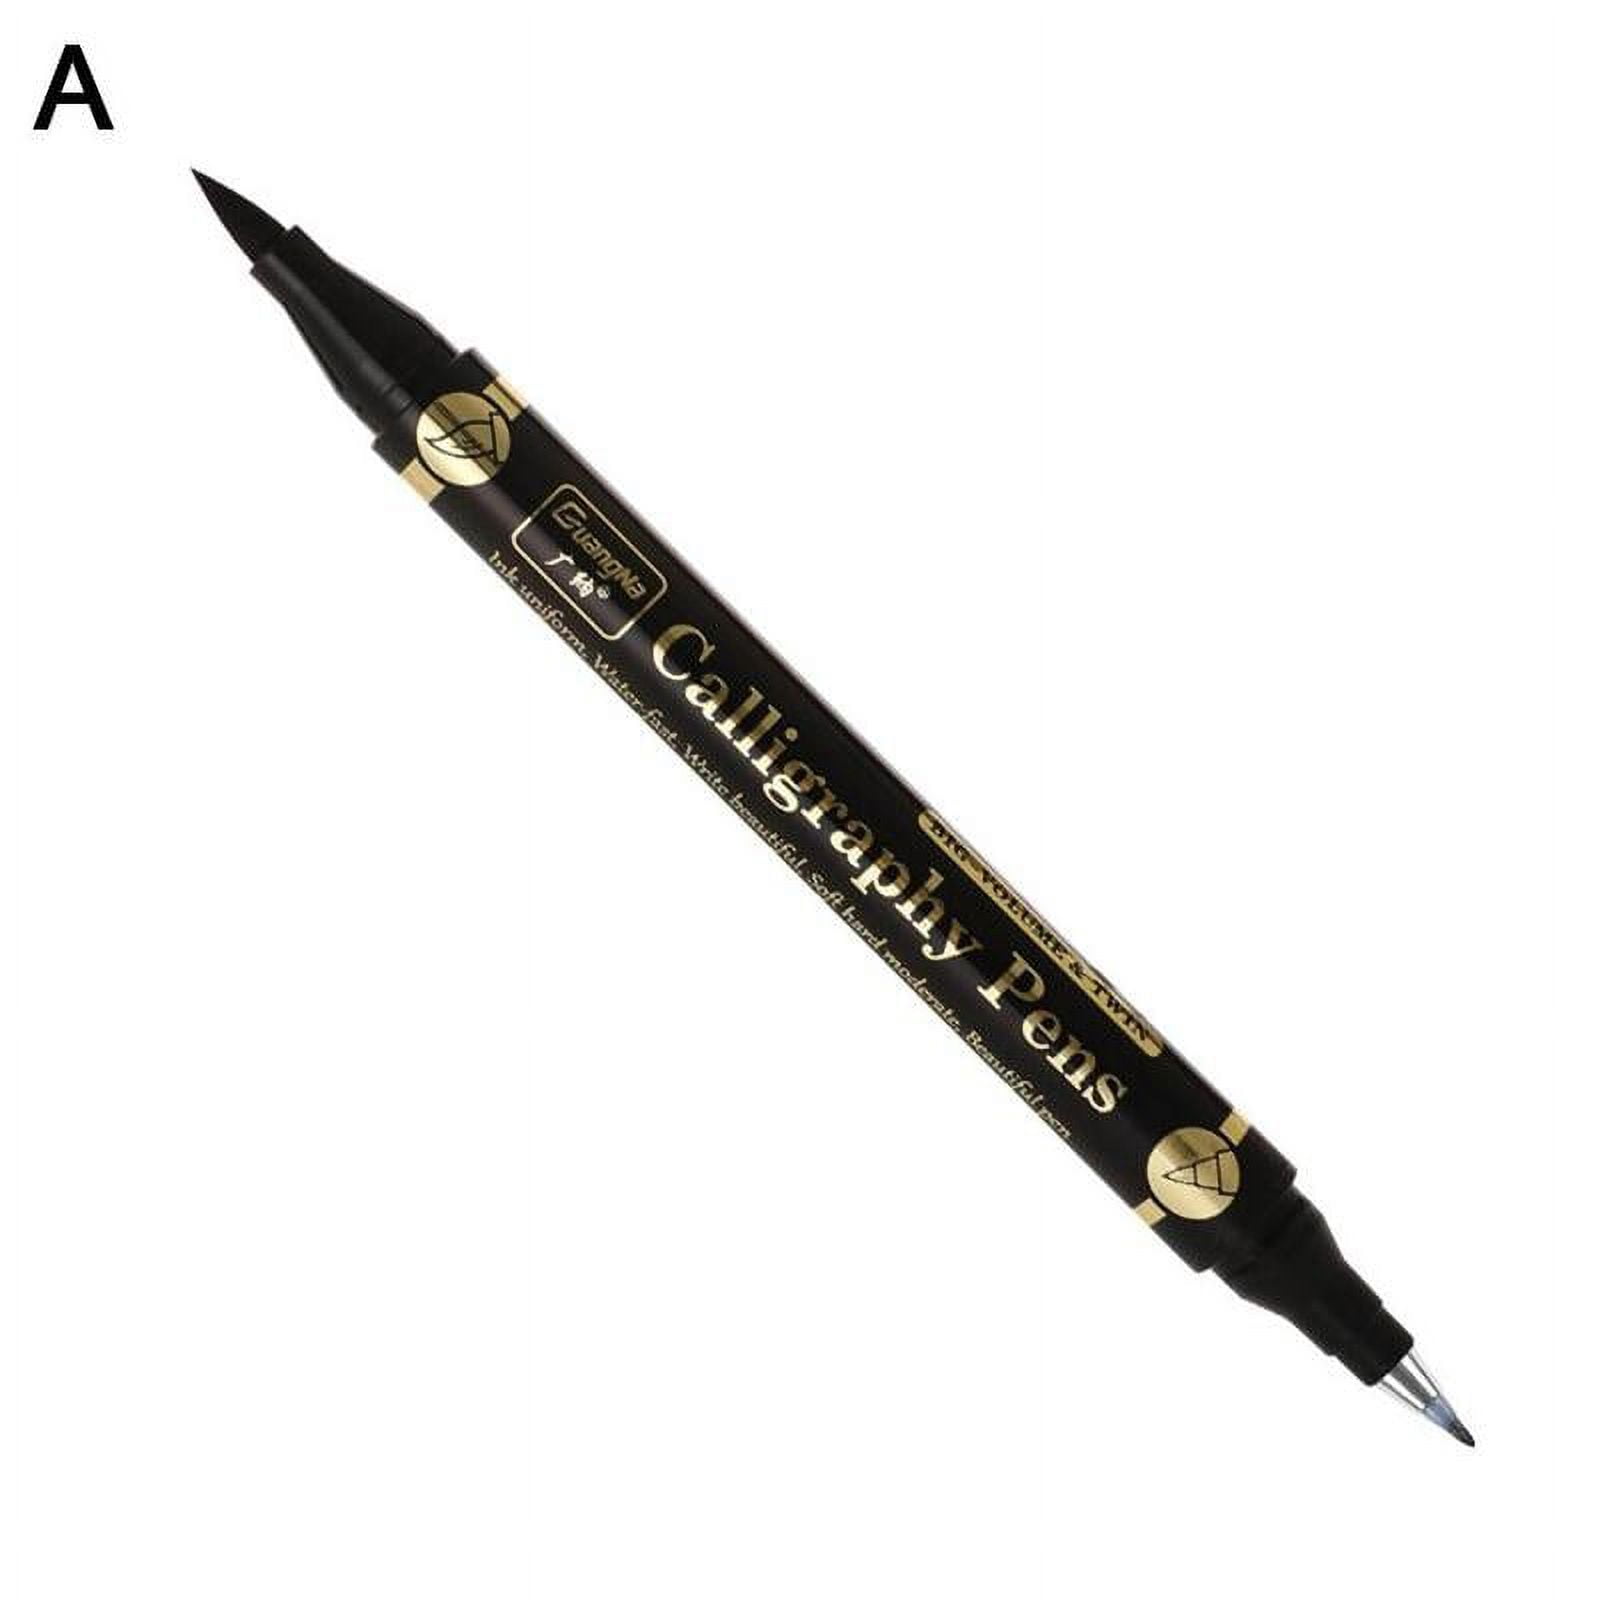 Fineliner Drawing Art Pens: 12 Black Fine Line Waterproof Ink Set